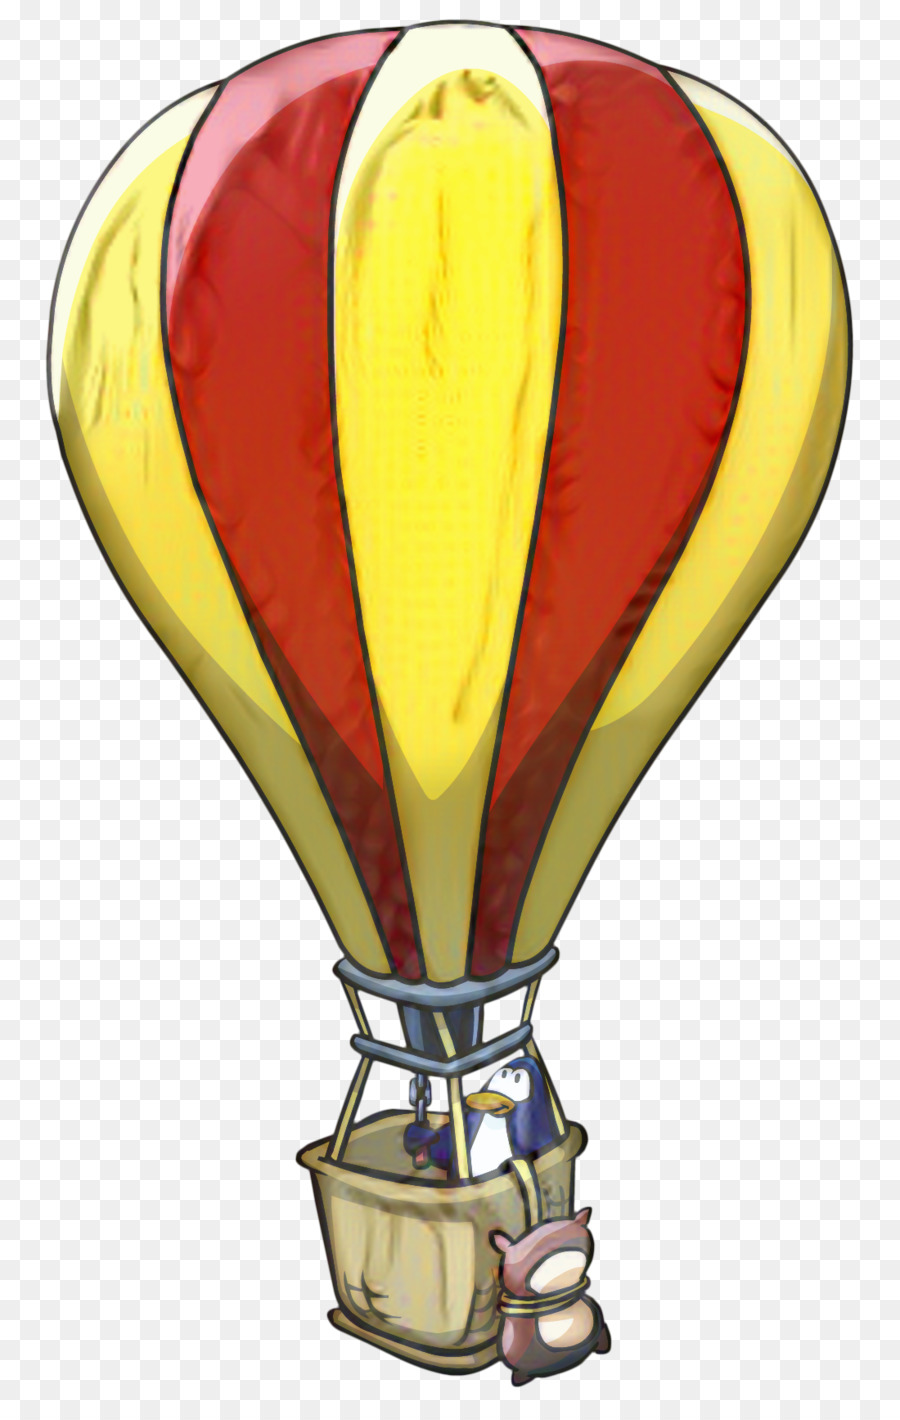 Heißluft Ballon Portable Network Graphics clipart Bild - 